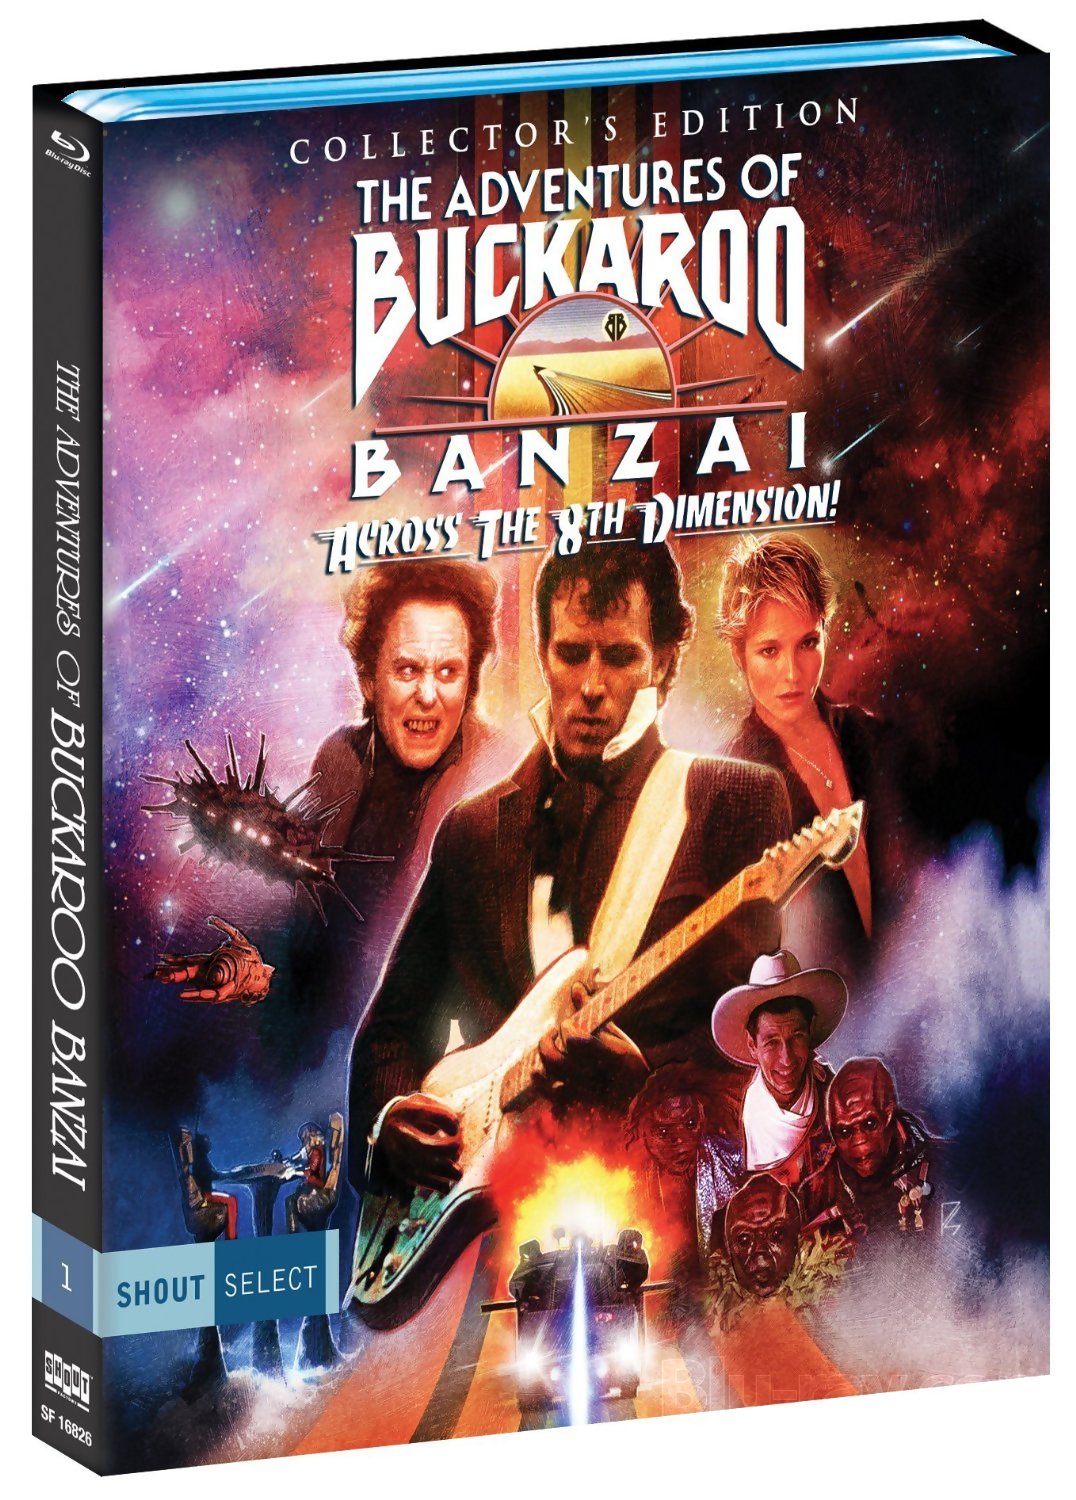 The Adventures of Buckaroo Banzai Across the Eighth Dimension by Earl Mac Rauch